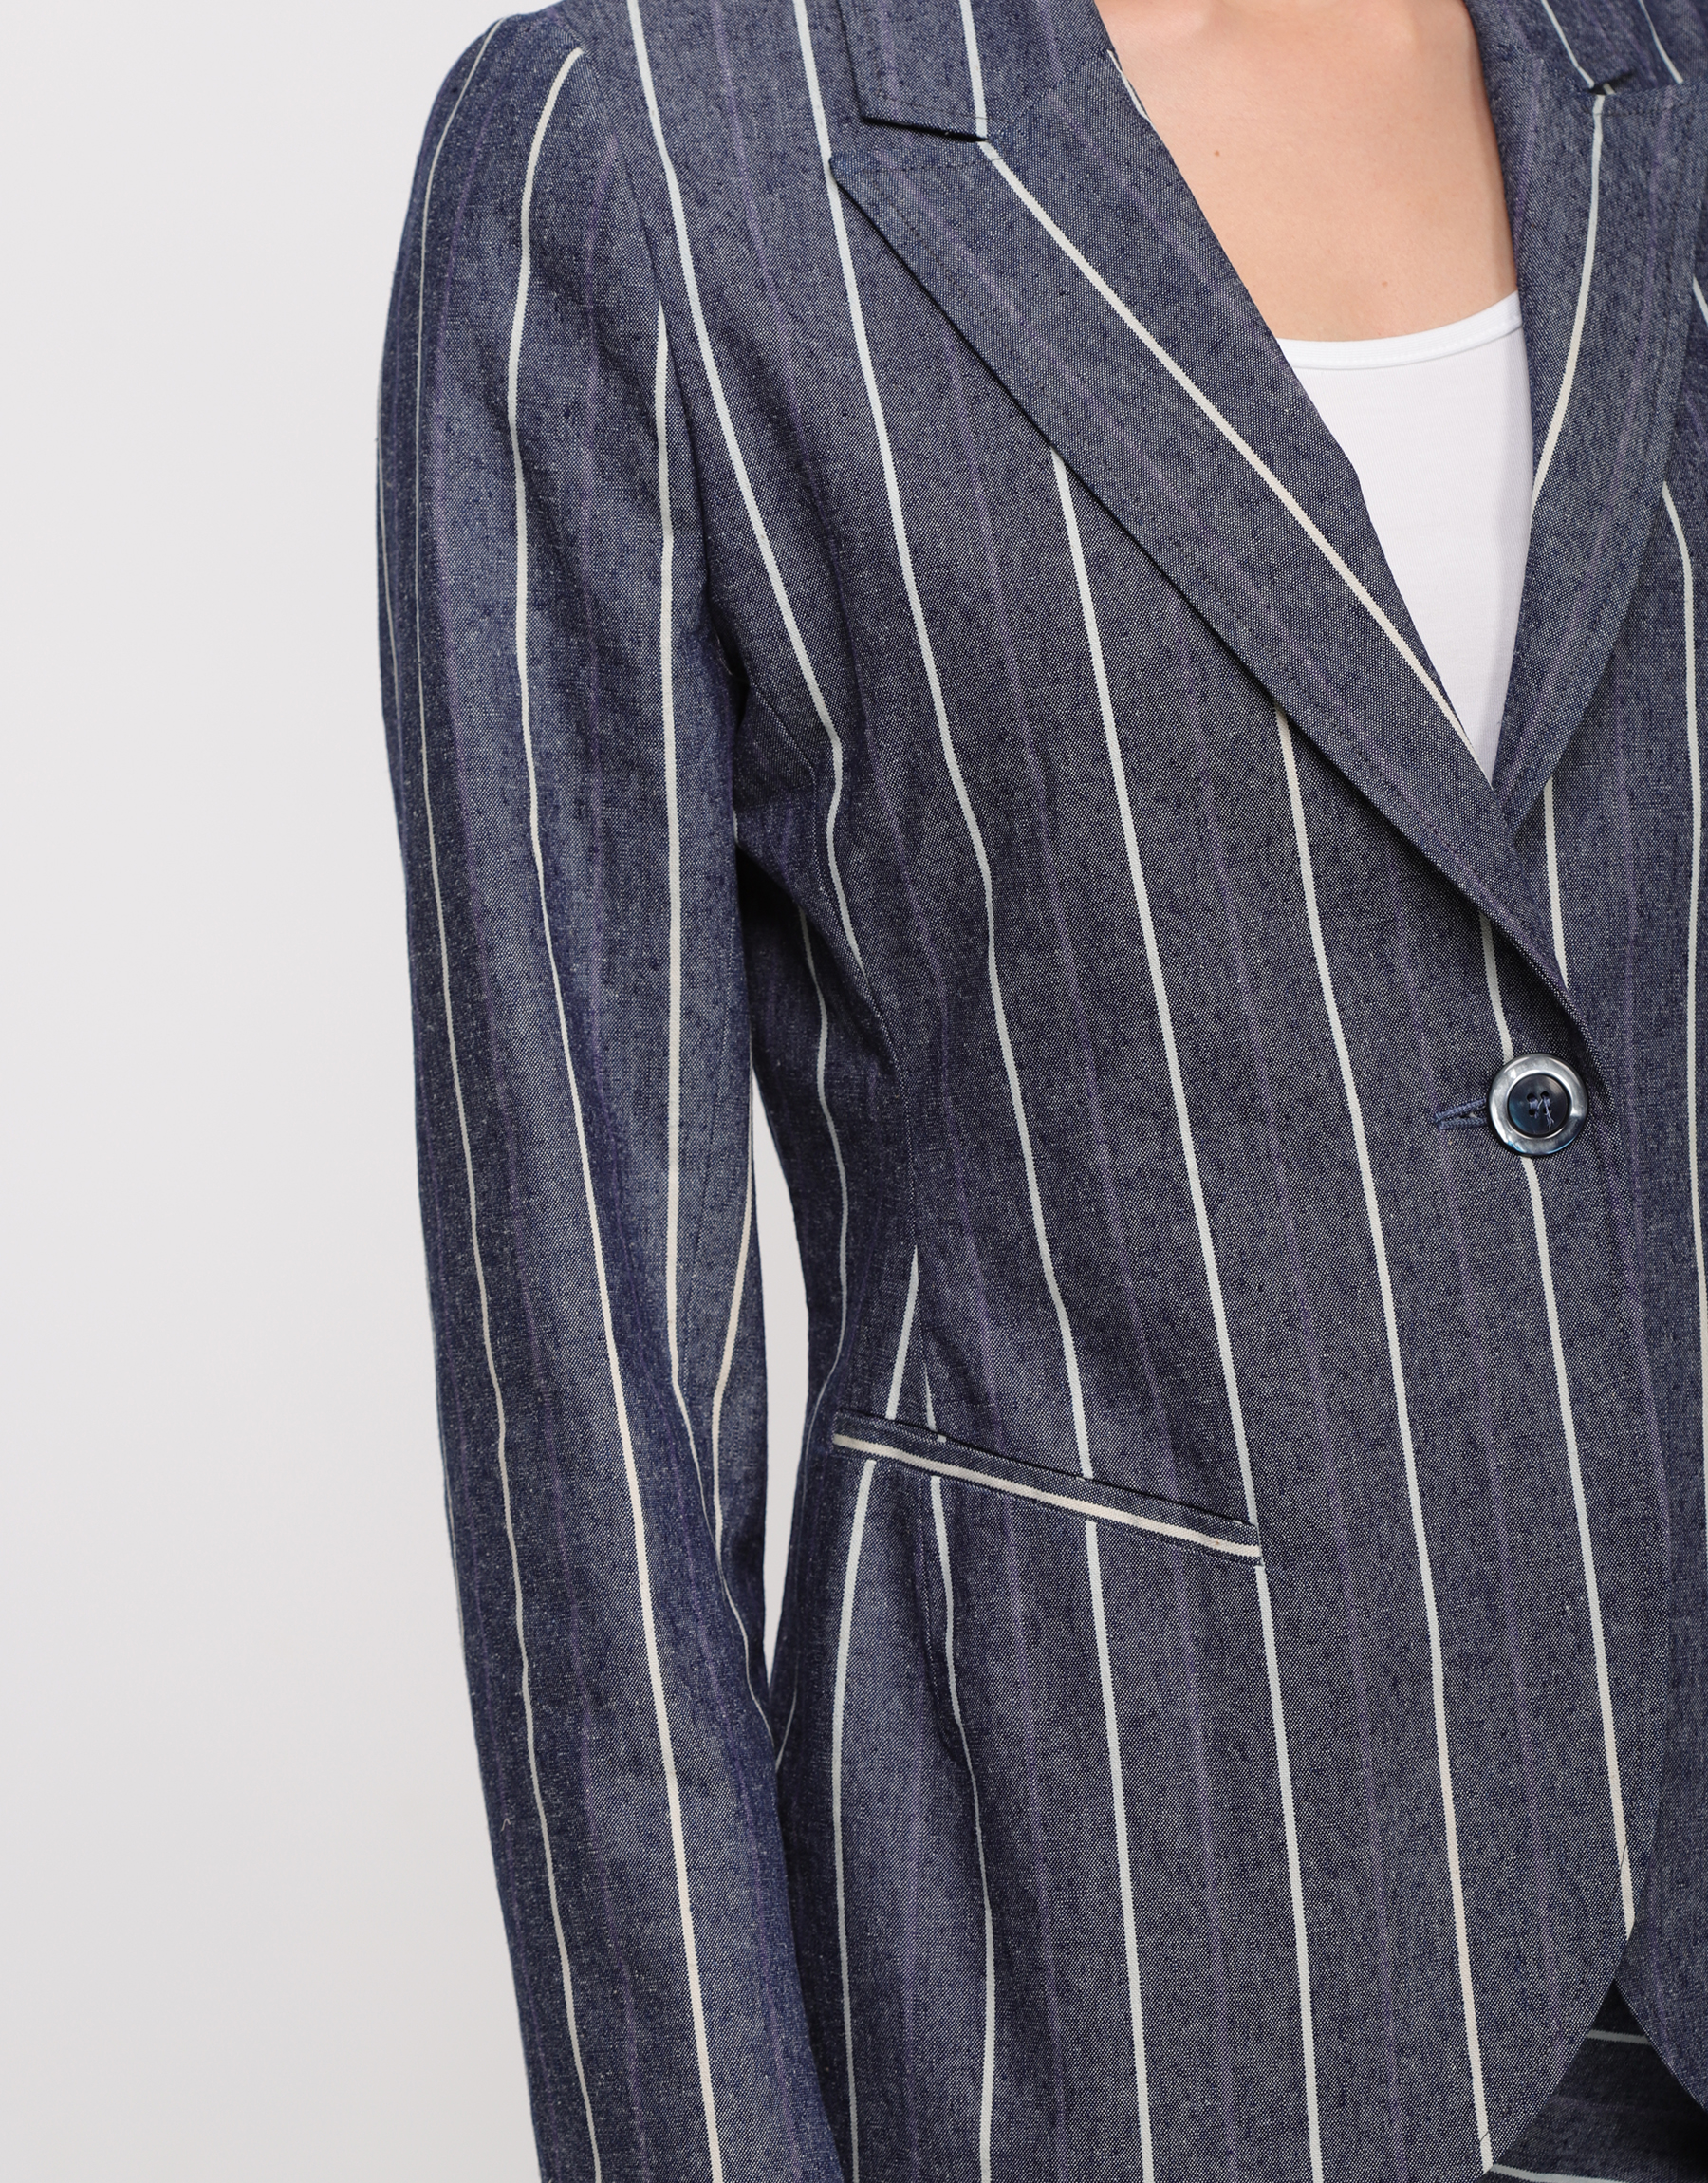 Blue denim blazer with white stripes